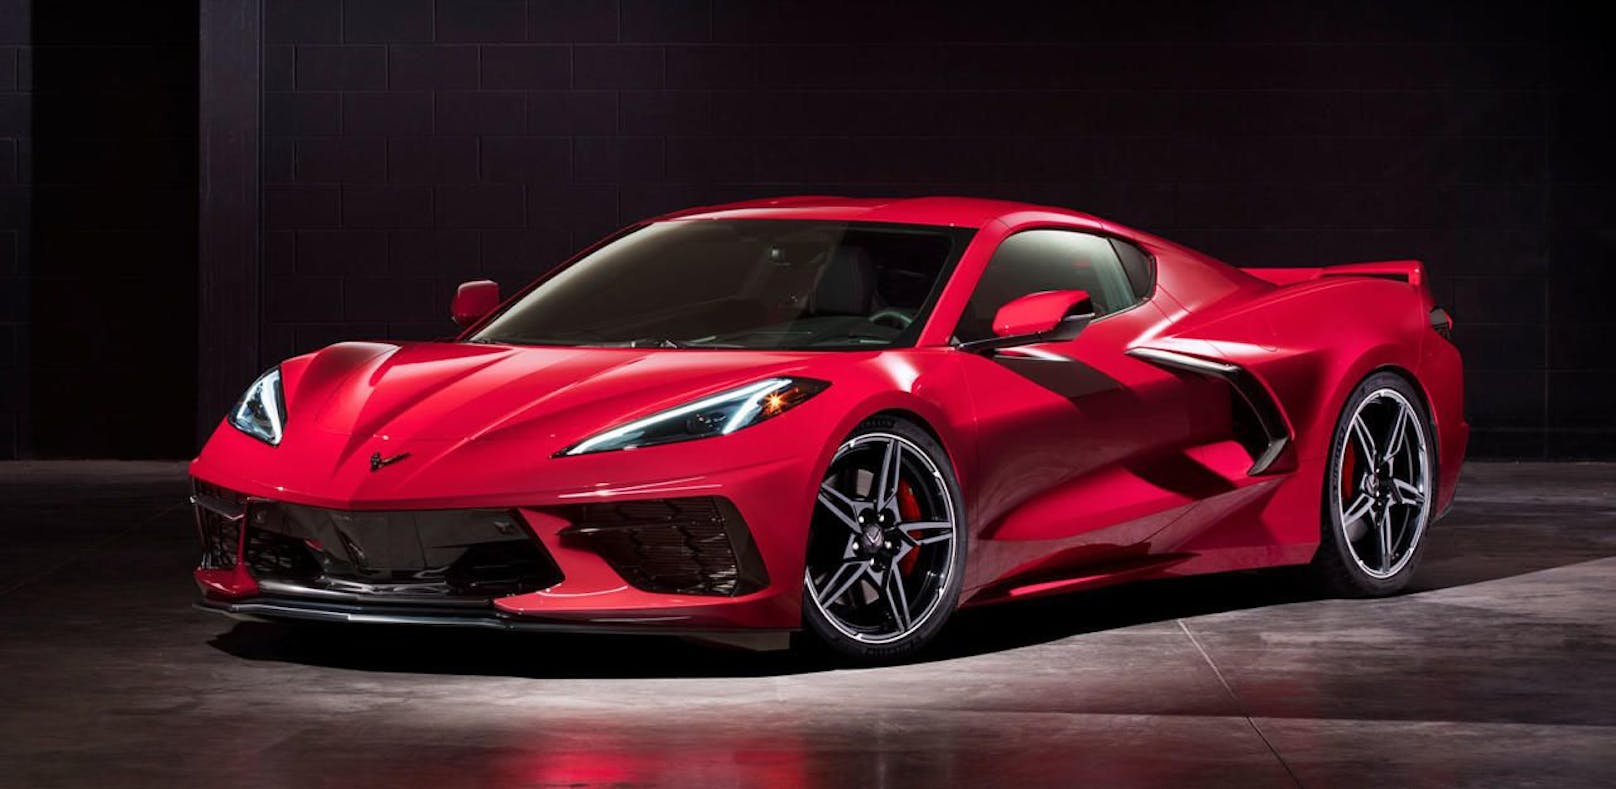 Die neue Corvette kommt 2020 mit Mittelmotor